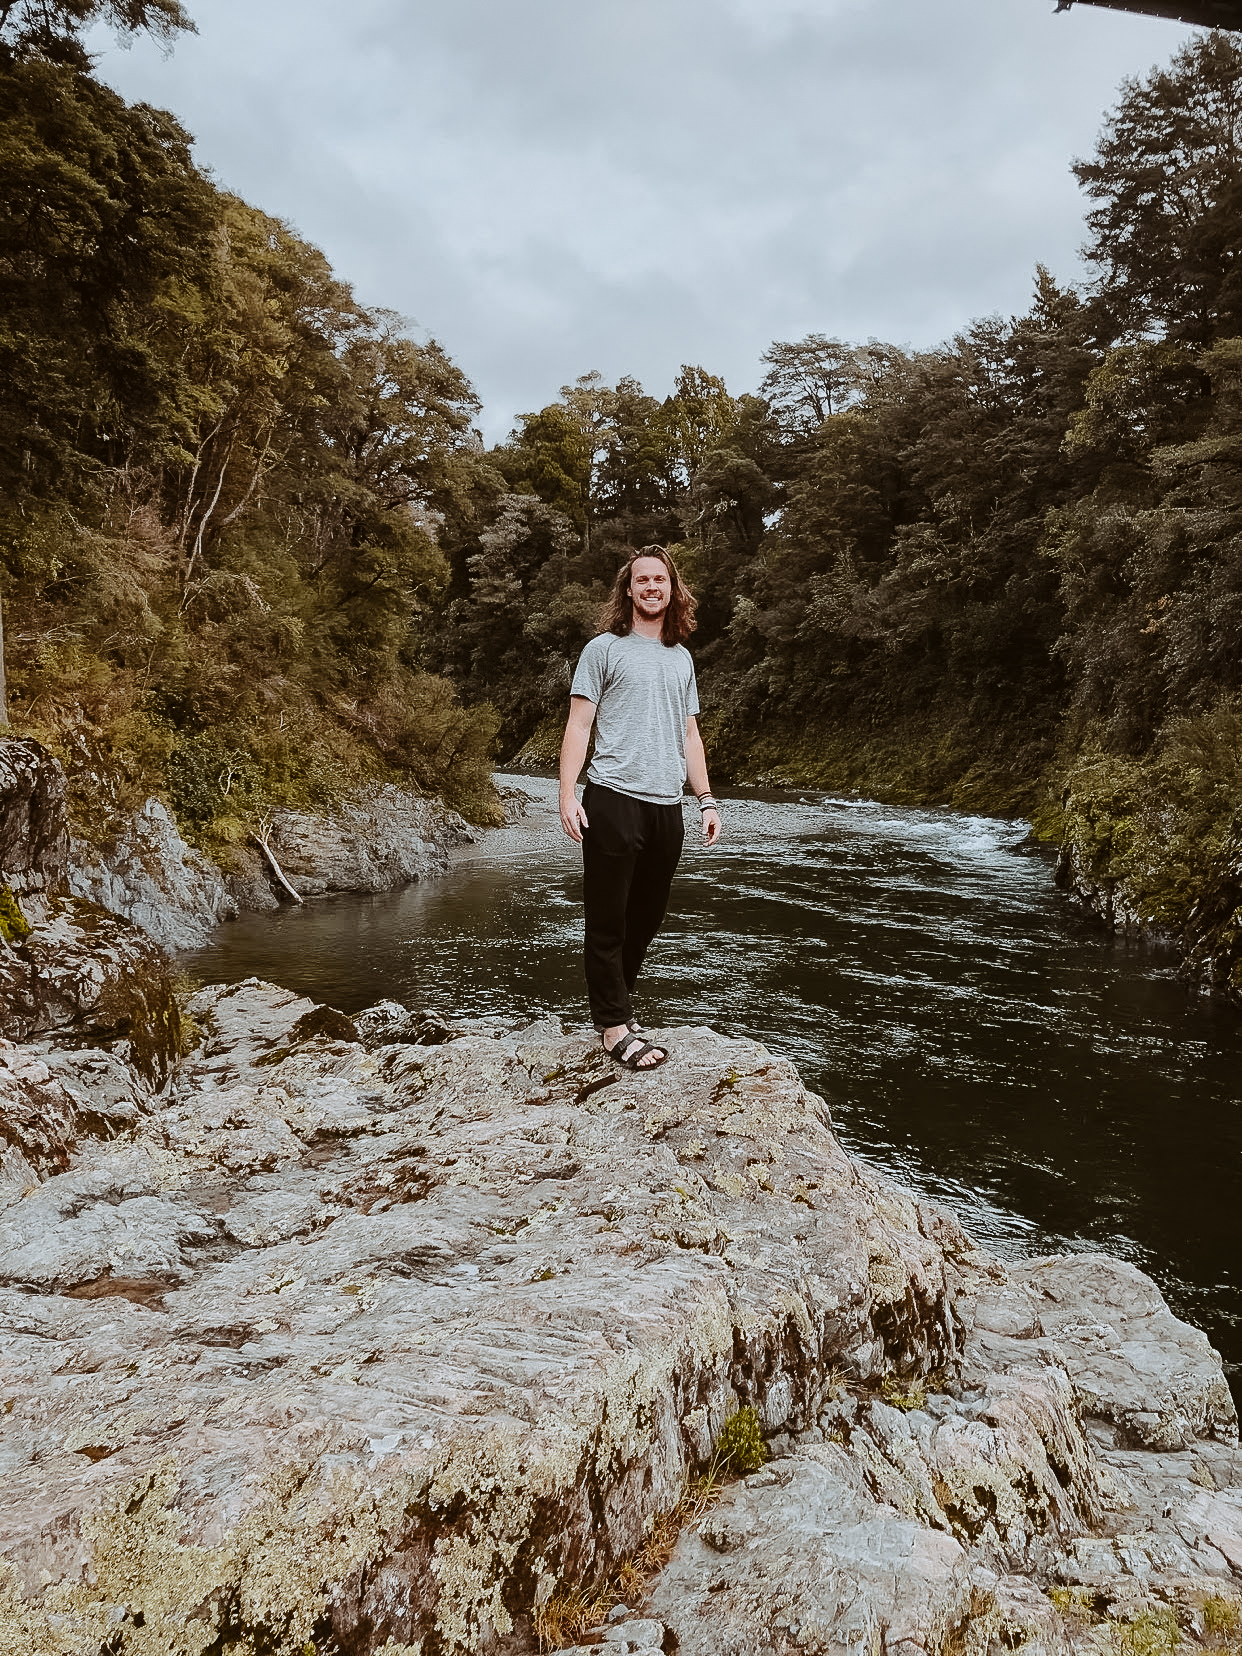 Nick-New-Zealand-Scenery-River